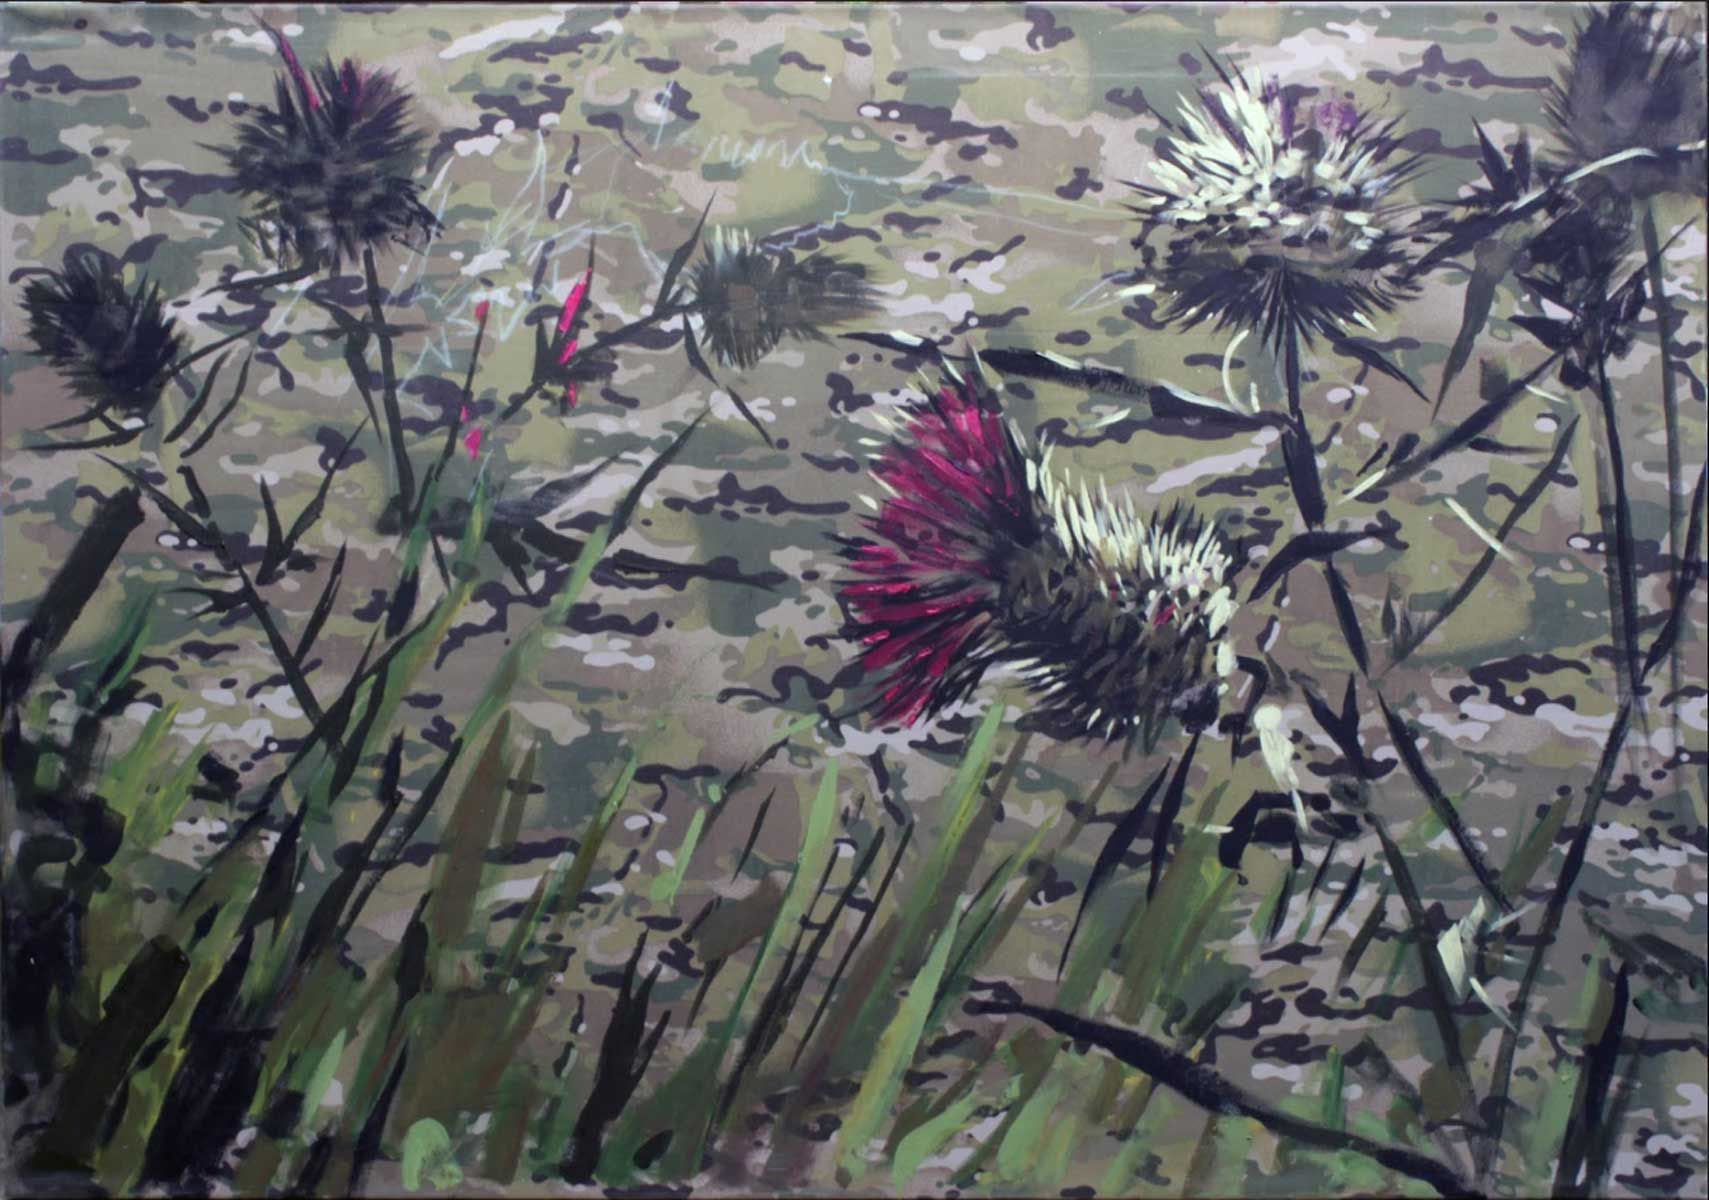 Original painting by Ed Potapenkov. "Thistles" Contemporary art in Satija Gallery. Oil on canvas